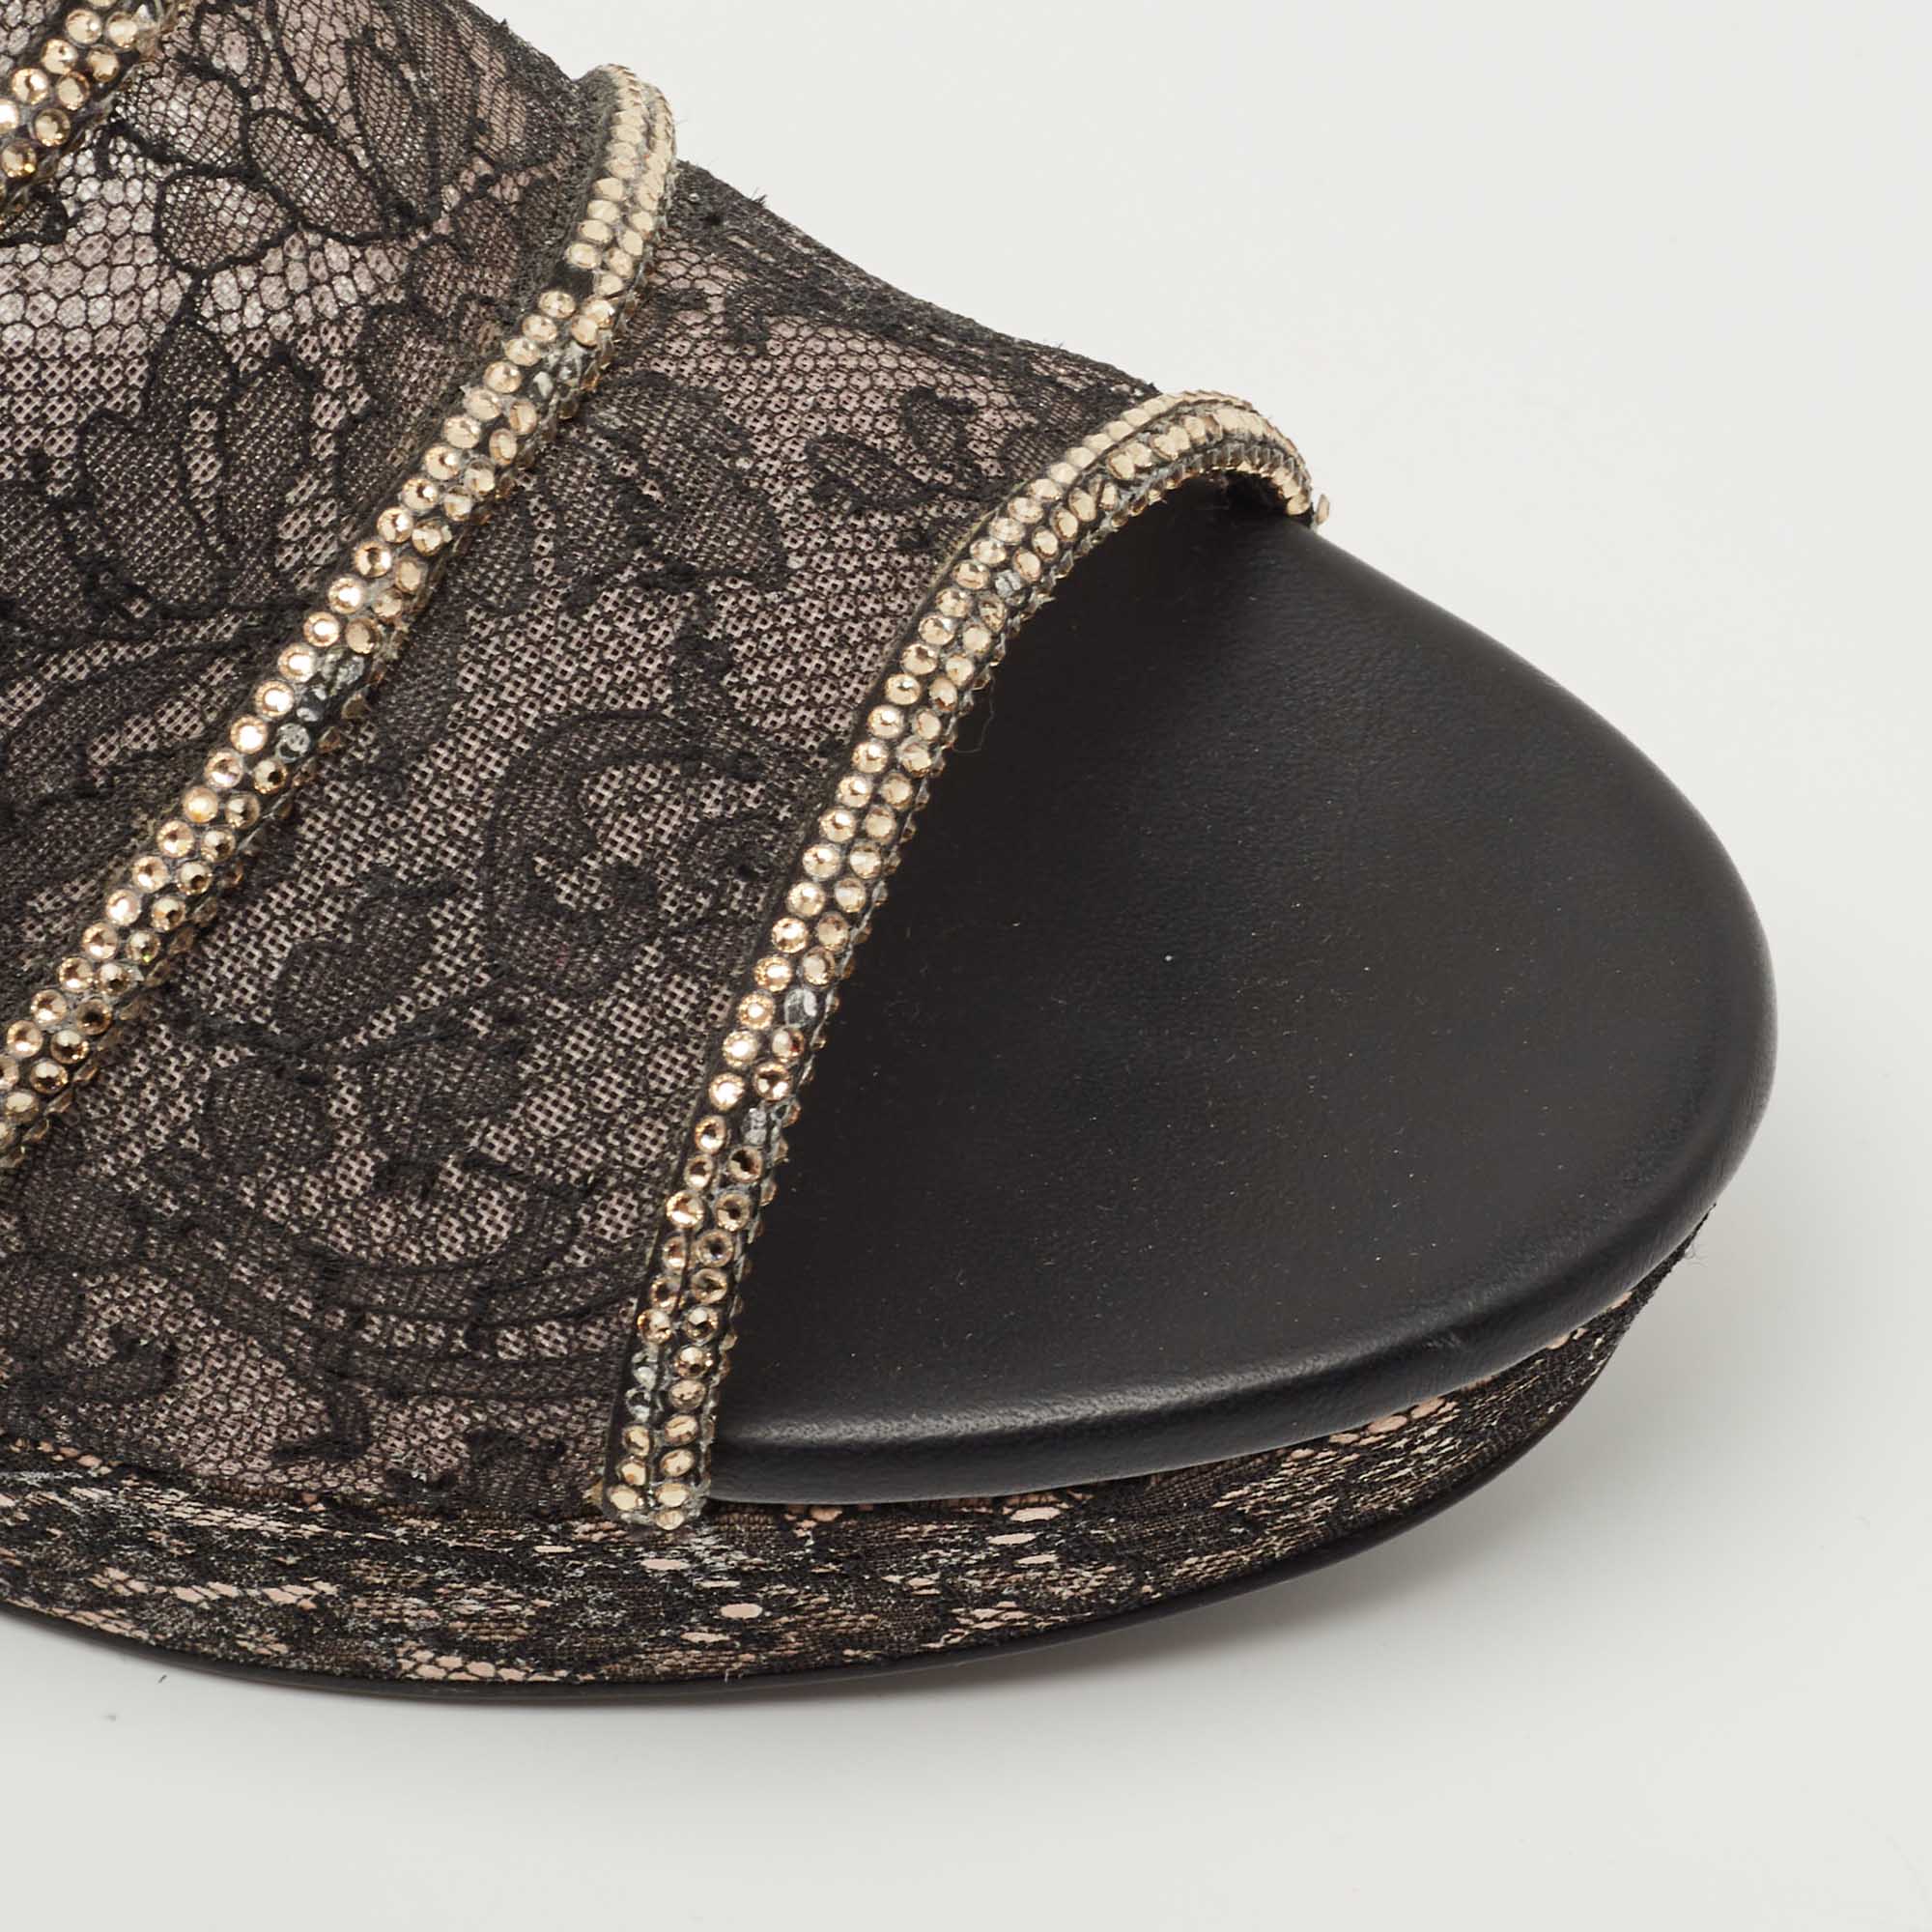 René Caovilla Black Lace Crystal Embellished Wedge Sandals Size 41